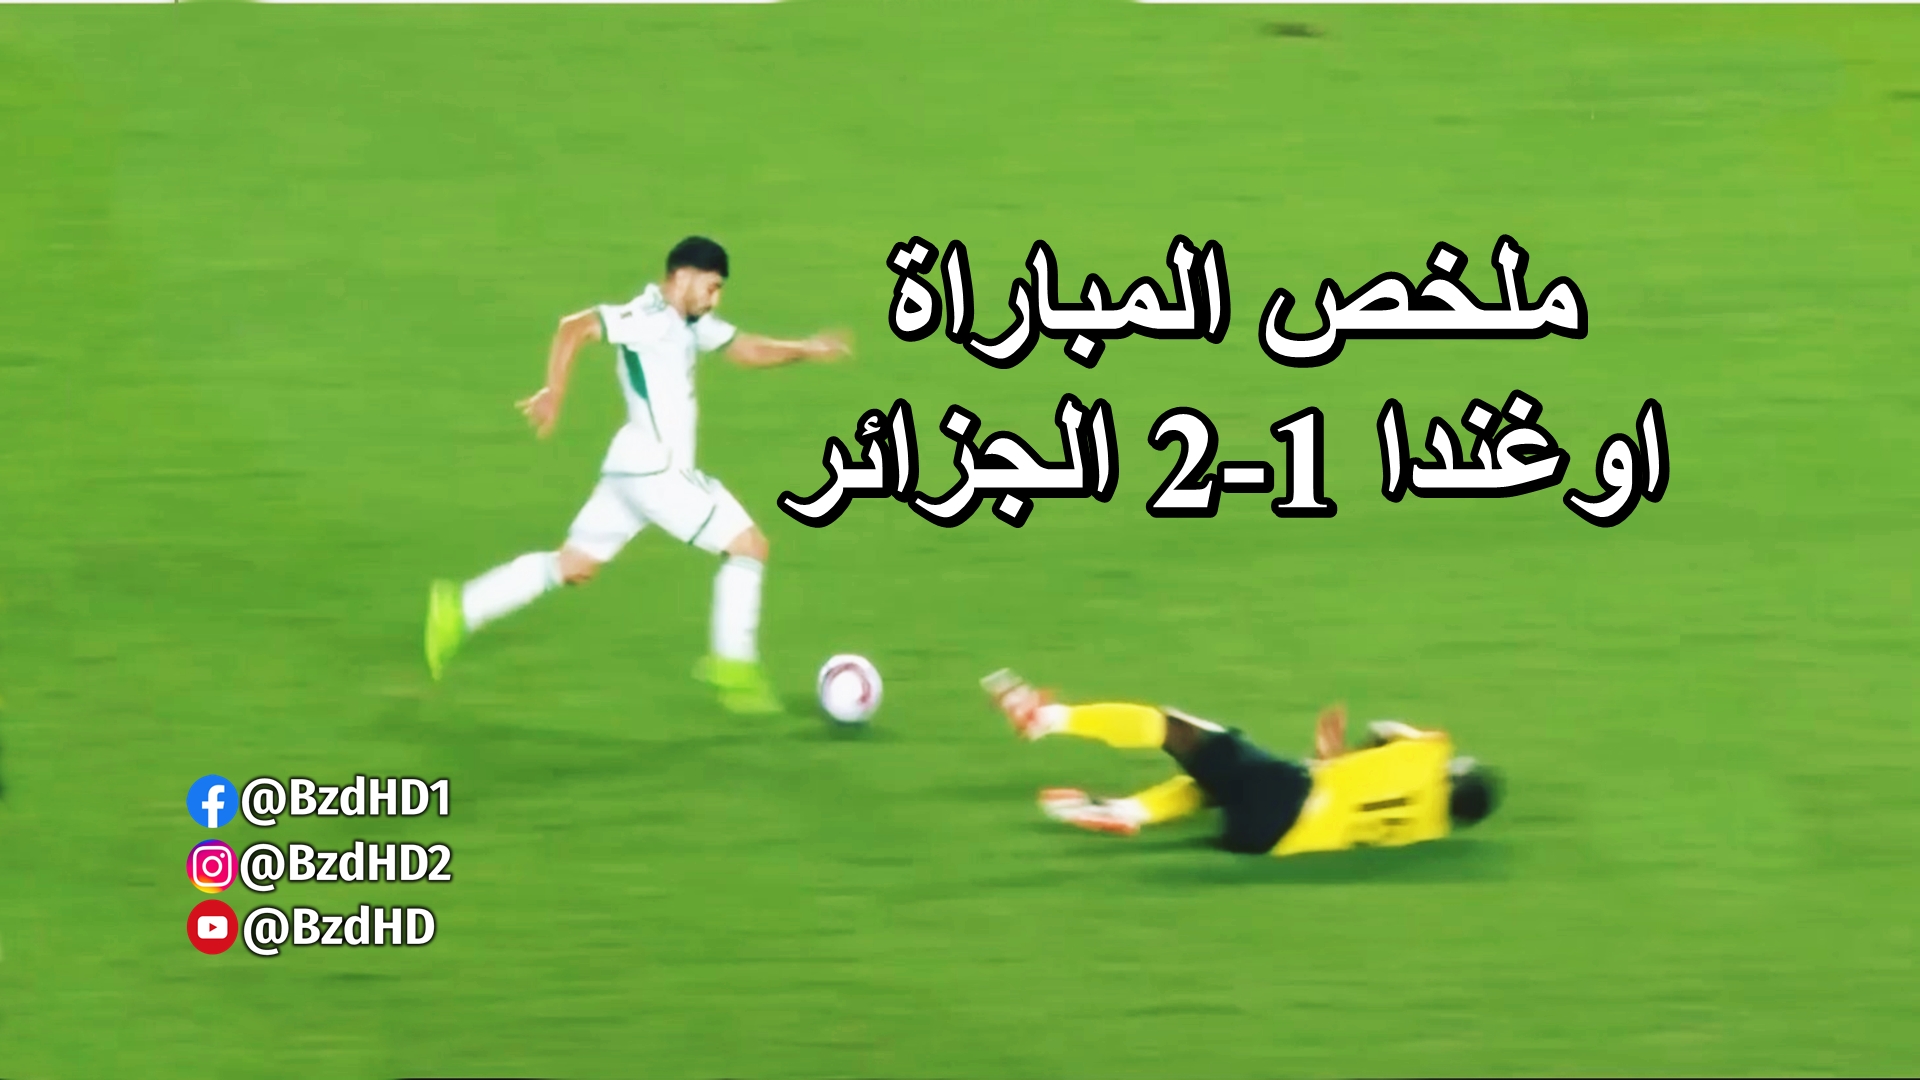 شاهد ملخص مبارة الجزائر واوغندا 2-1 - اهداف مباراة الجزائر 10